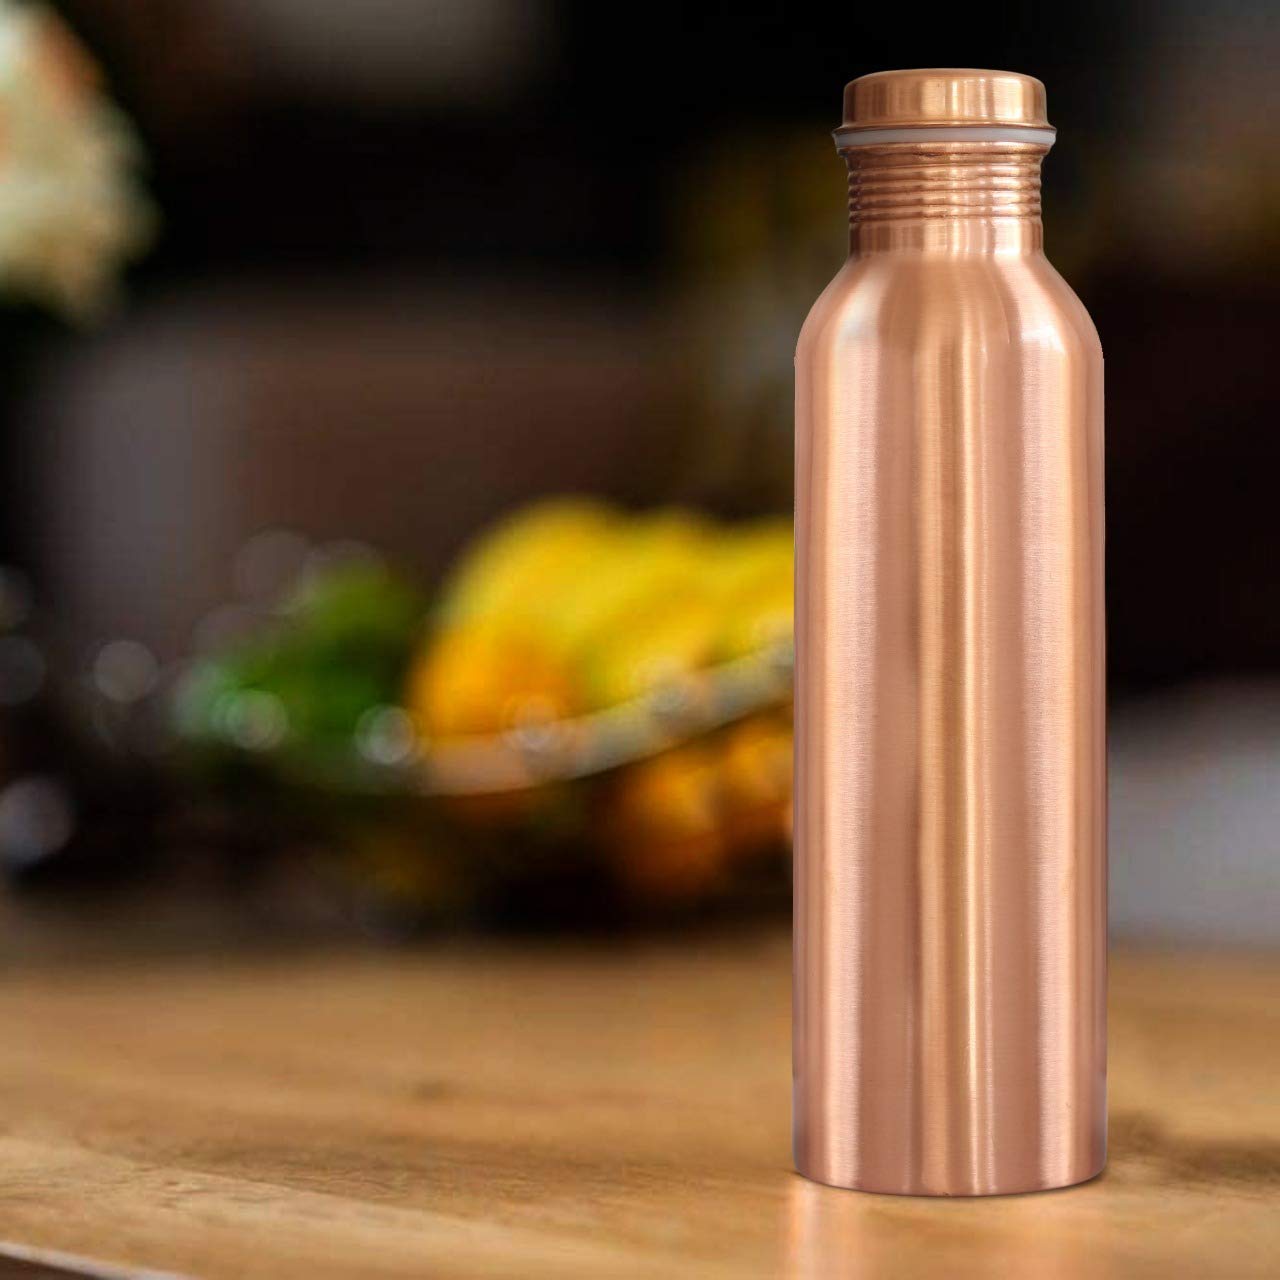 Antique Ayurvedic Copper Water Bottle & Glass Gift Set: Buy Now